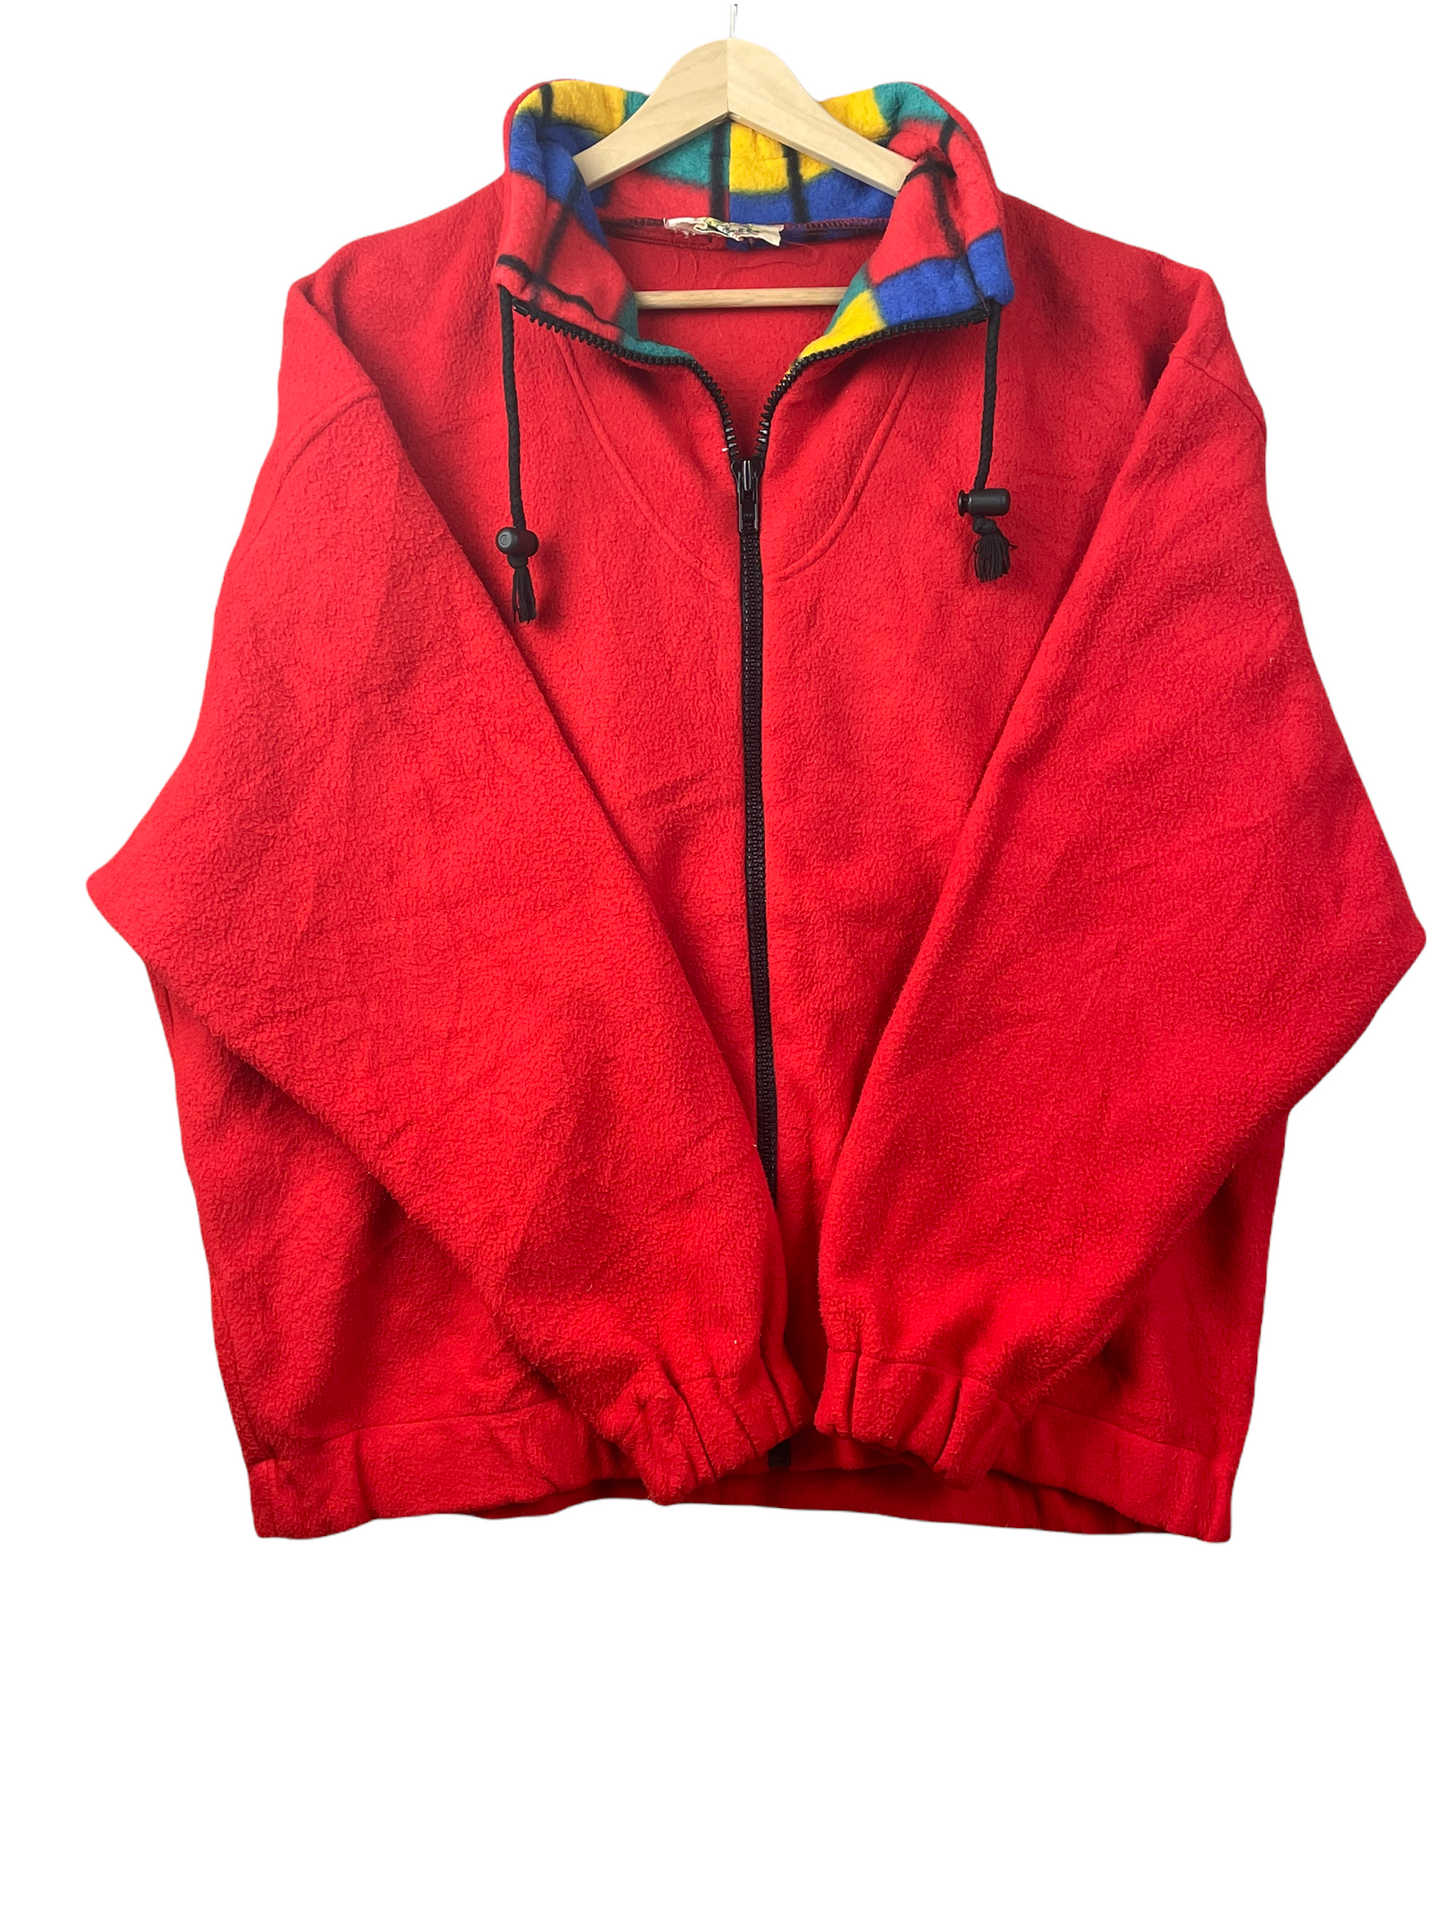 90s Girardelli Design Crazy Fleece Red